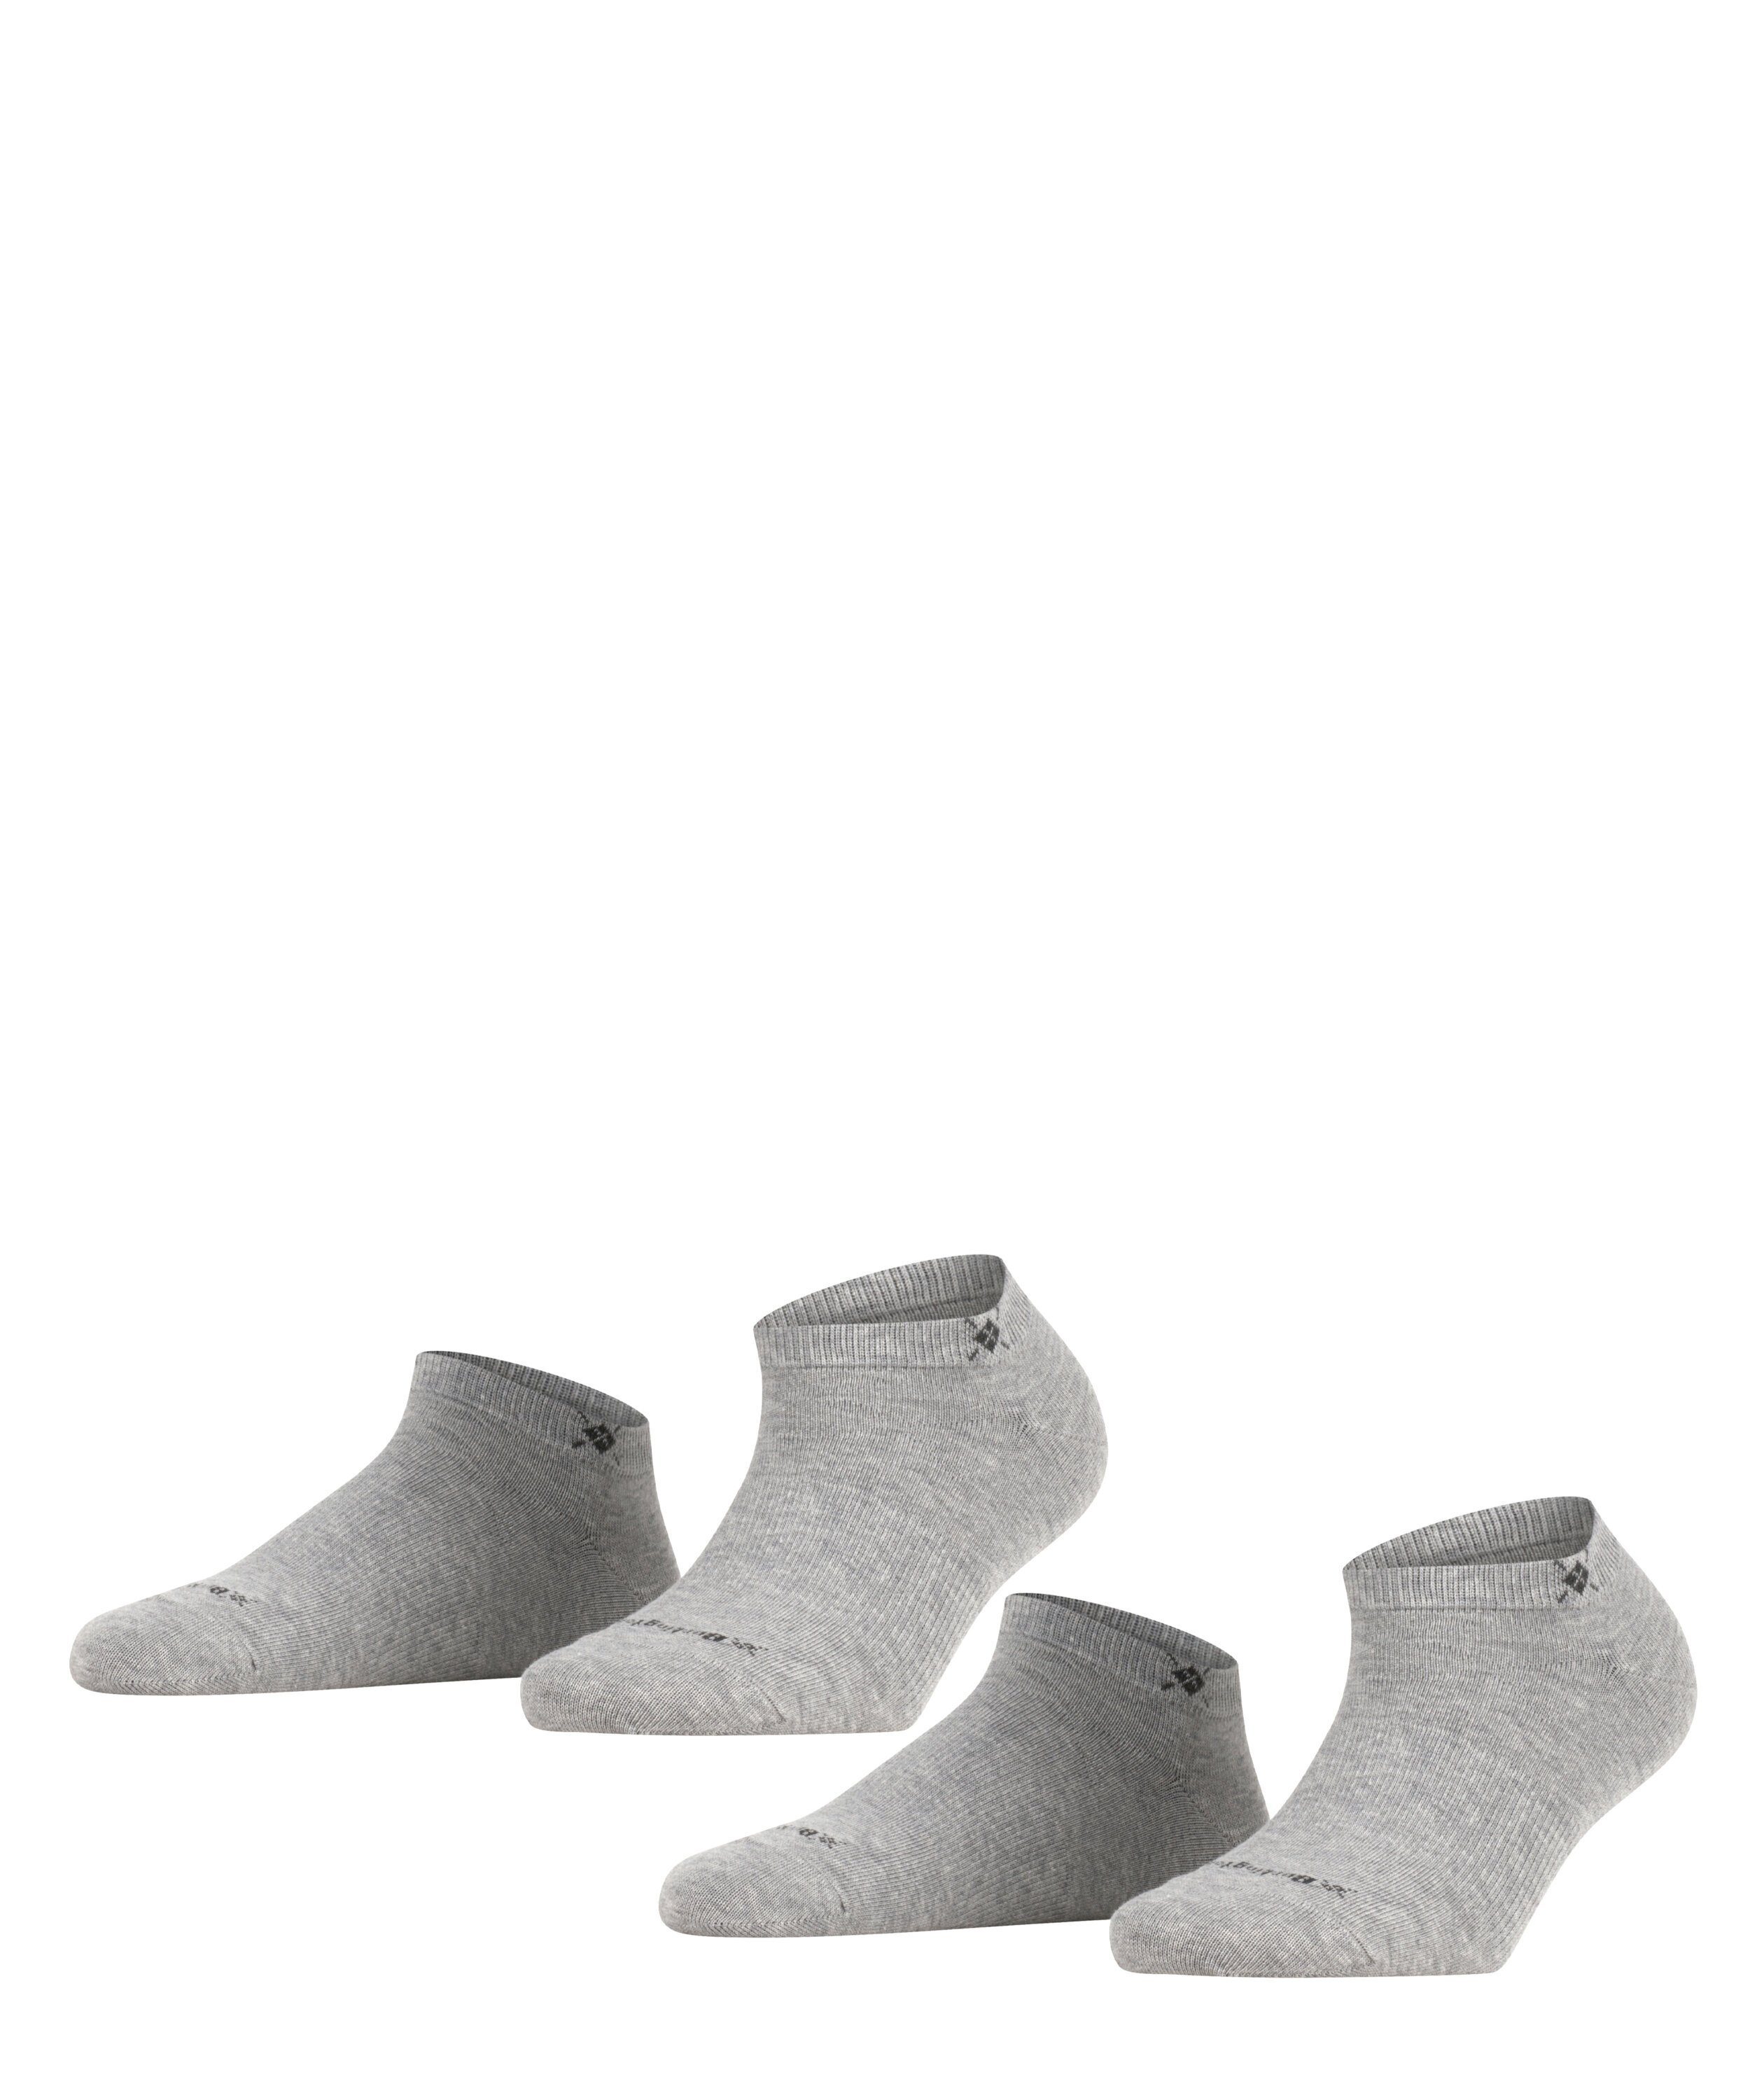 Burlington gekämmter light aus Everyday (3400) (2-Paar) weicher Sneakersocken Baumwolle grey 2-Pack